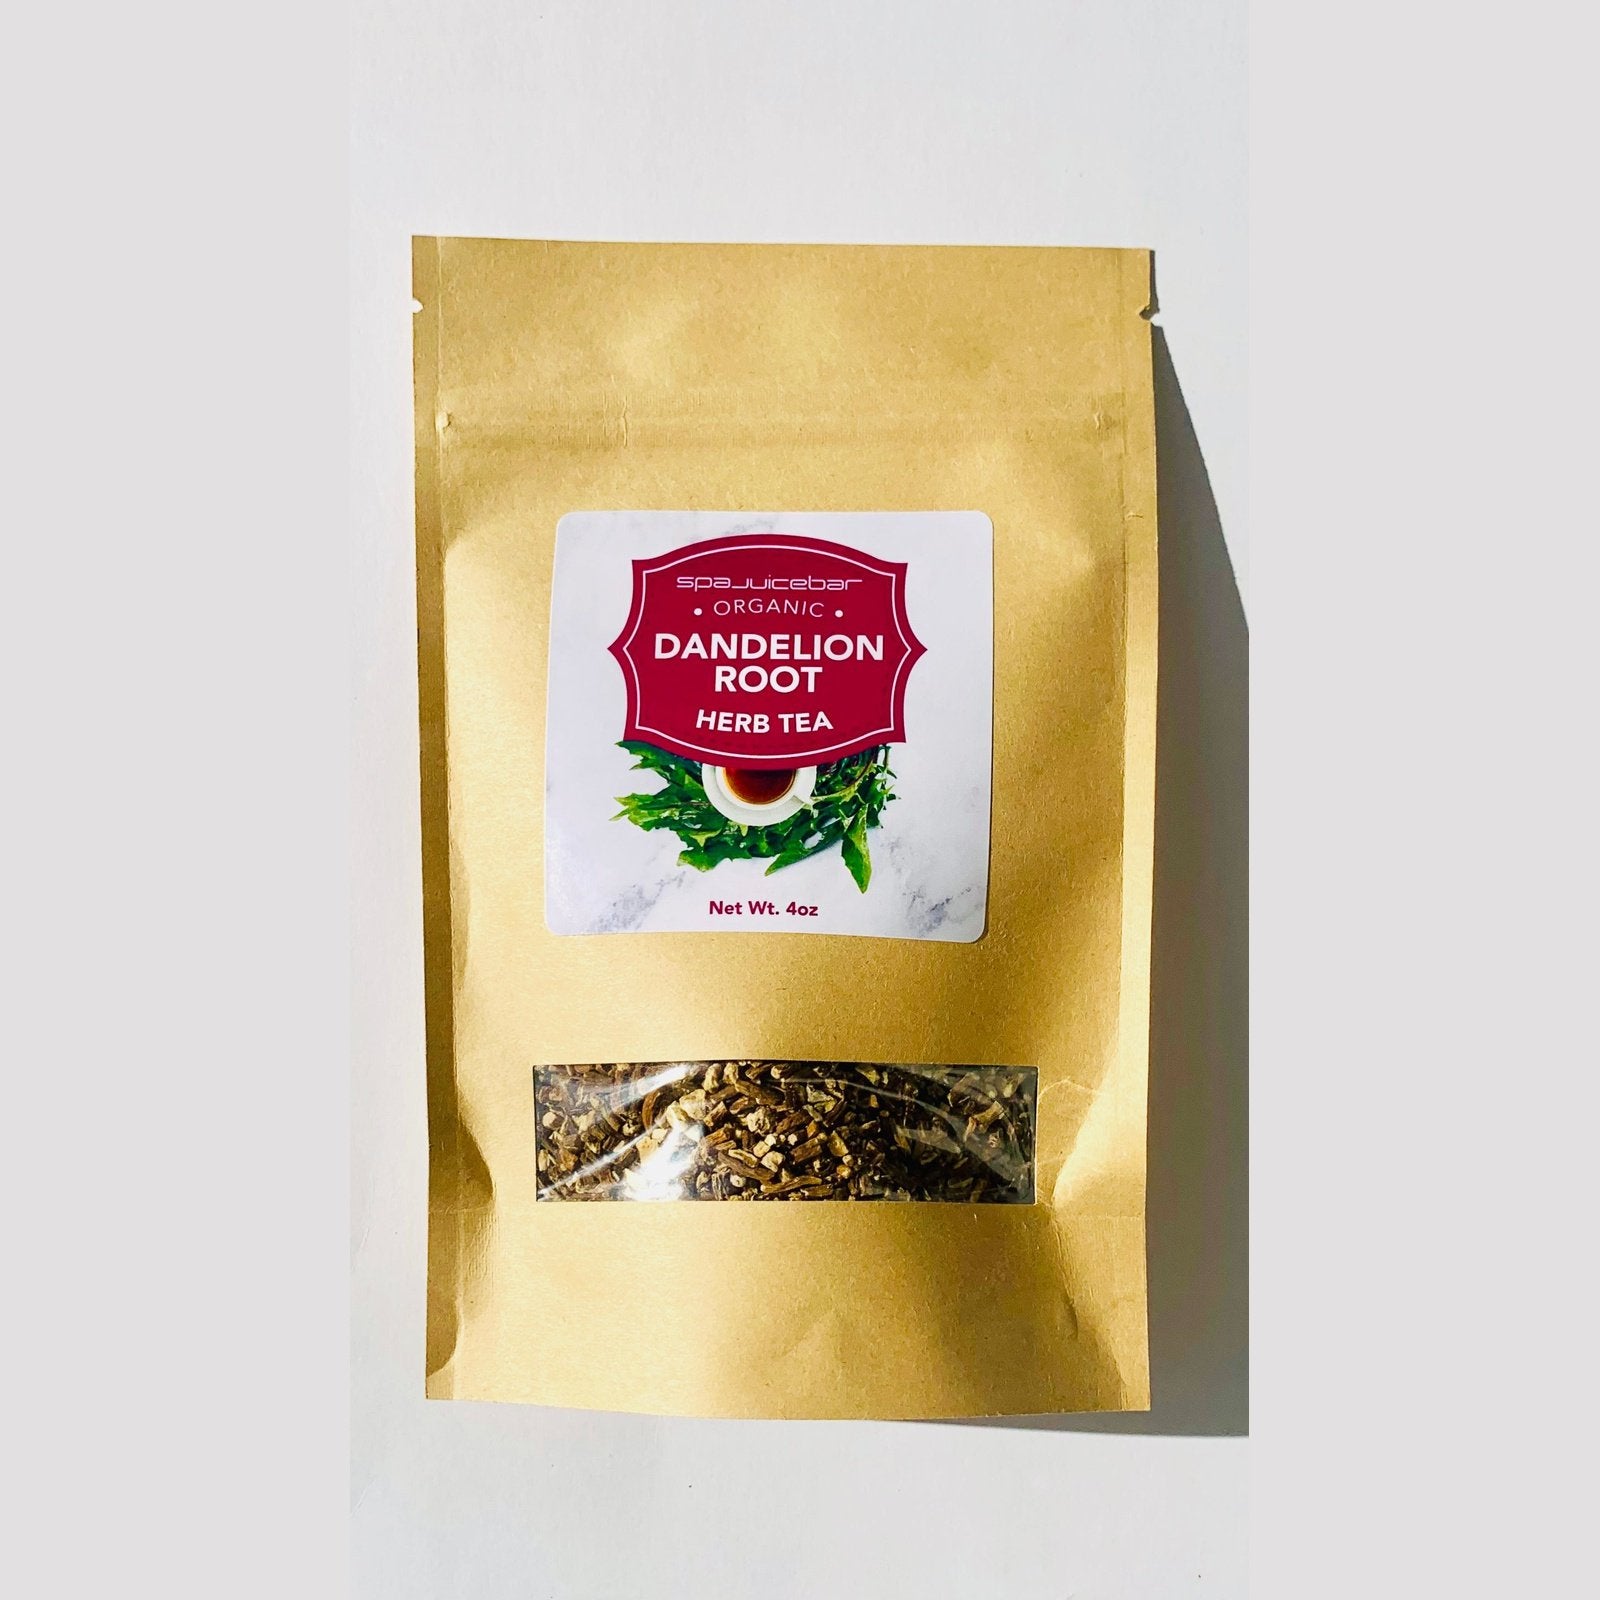 spajuicebar 4oz Dandelion Root Tea